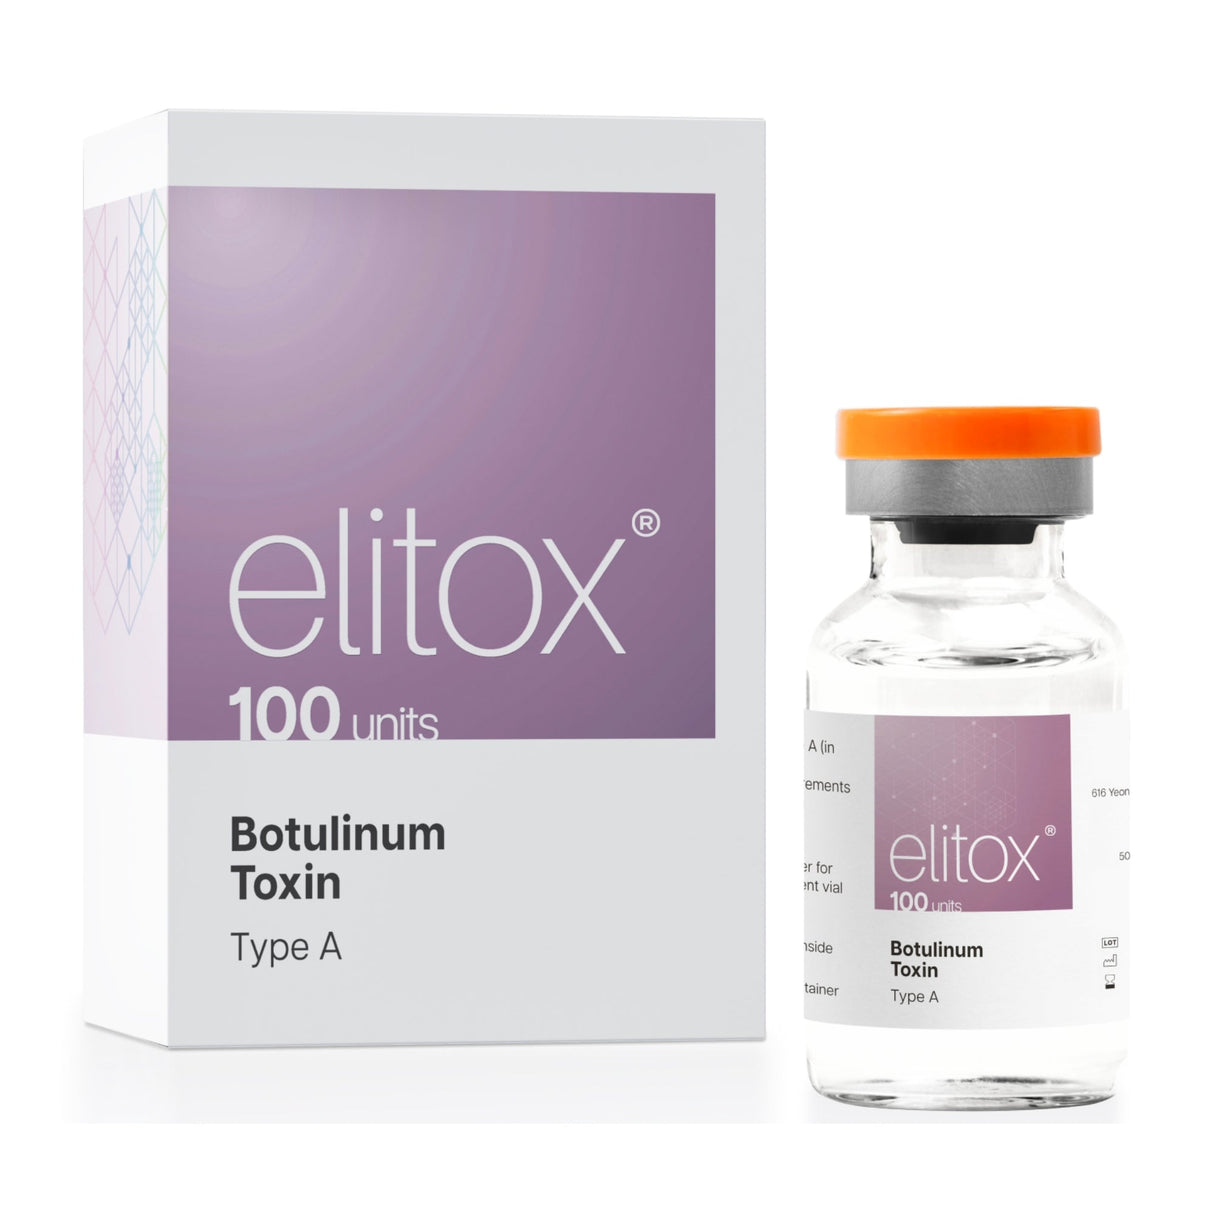 Elitox 100u - Filler Lux™ - Botulinumtoxin - Koru Pharmaceuticals Co., Ltd.